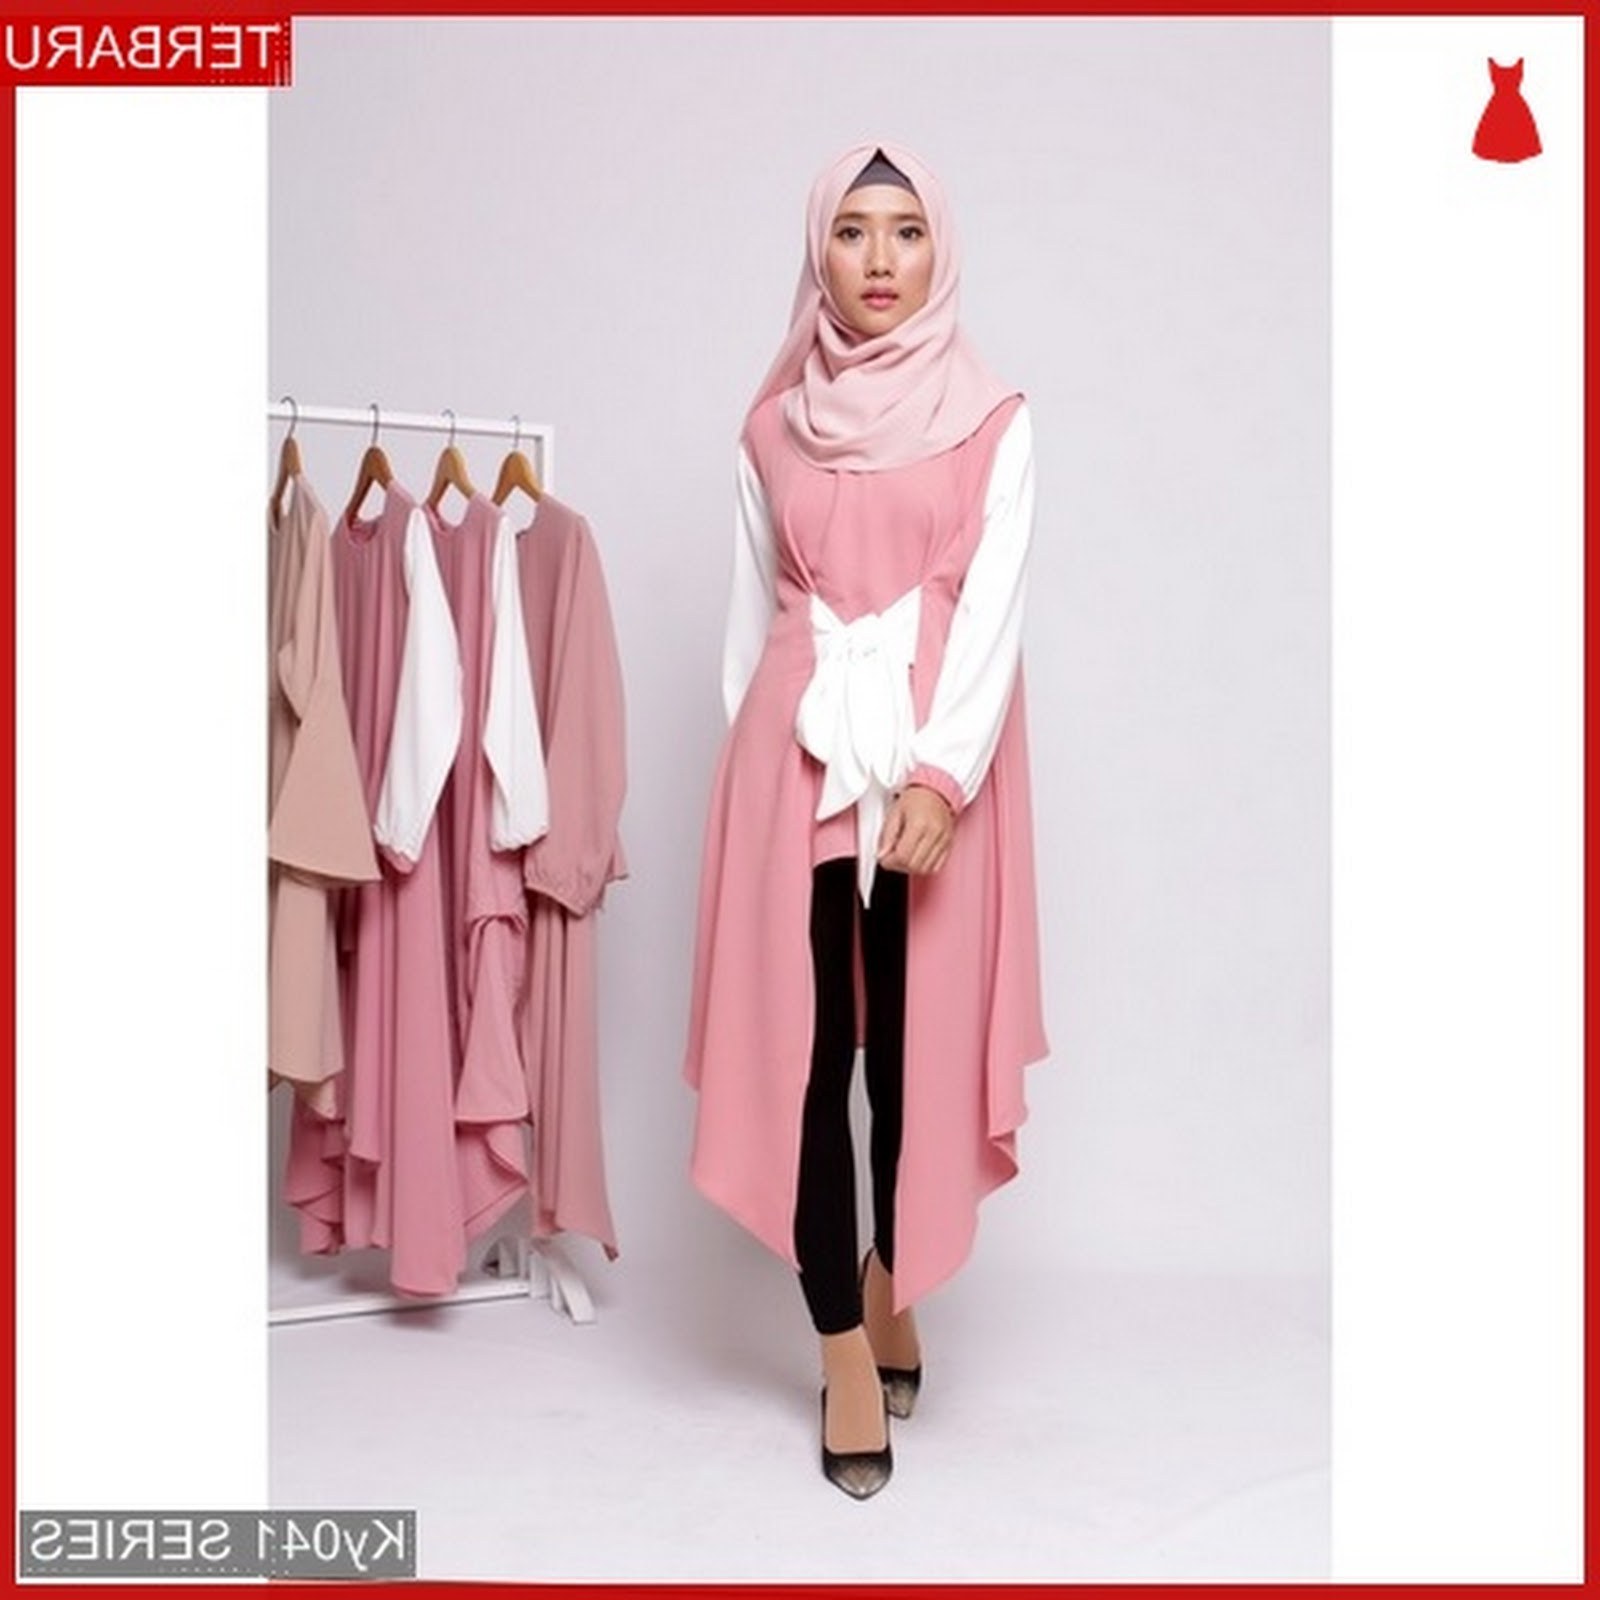 Bentuk Harga Baju Lebaran 3id6 Dapatkan Baju Muslim Lebaran Paling Keren Terbaru Di Bmg